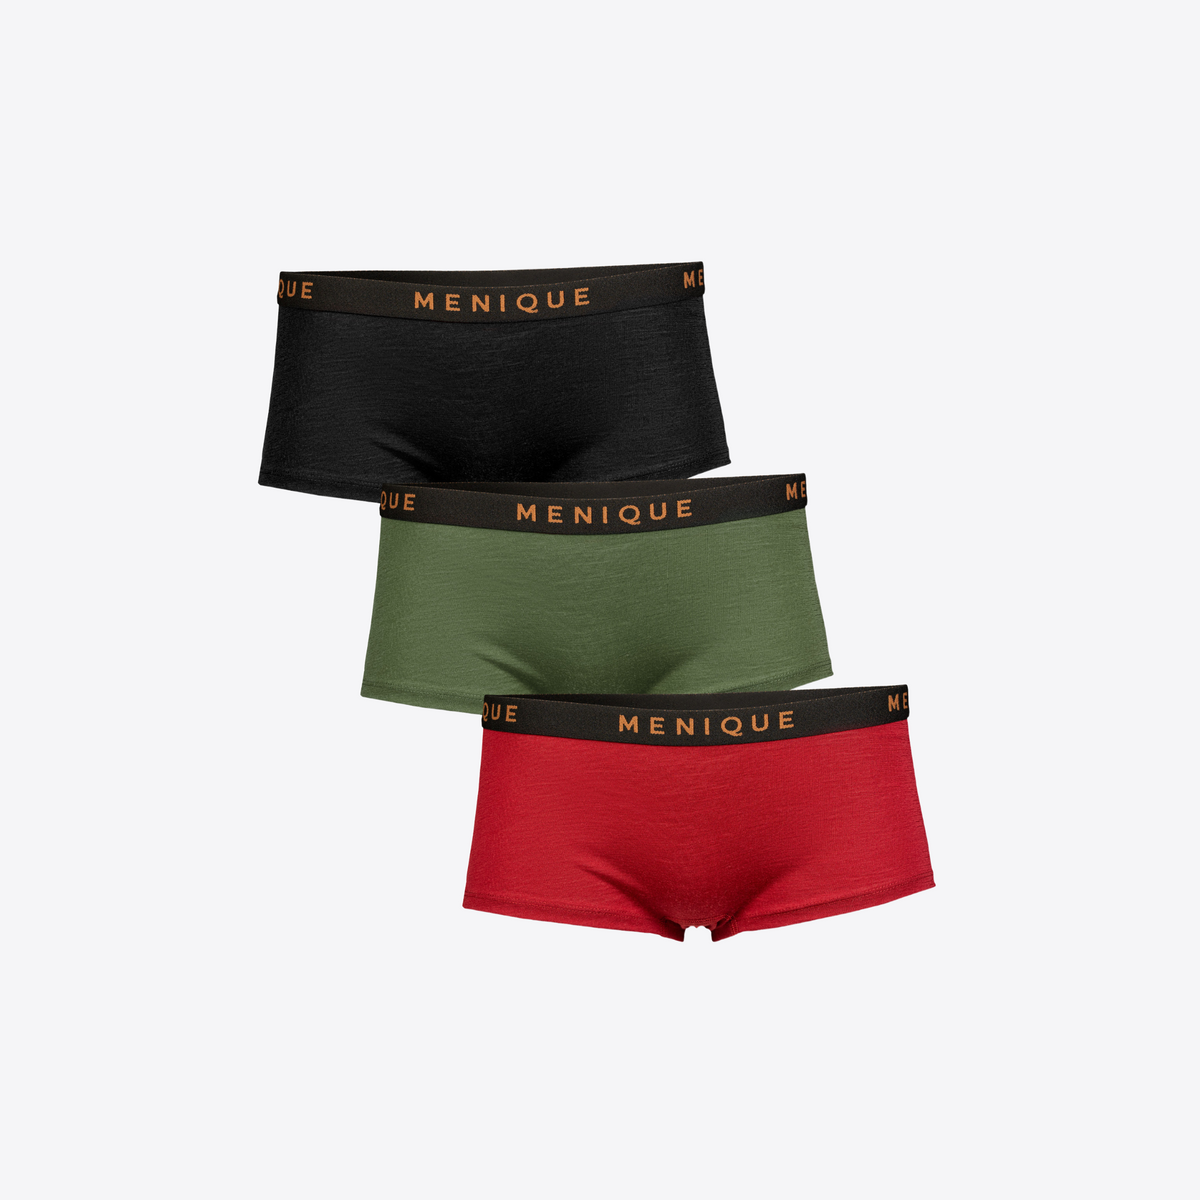 MENIQUE 100% Merino Wool Womens Boxer Shorts 3-Pack L